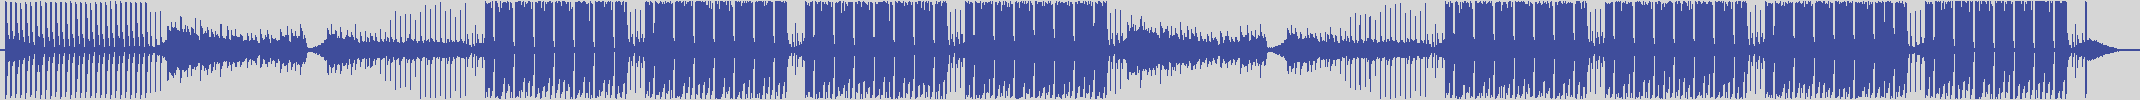 nf_boyz_records [NFY033] Mandragora - Continuous Work [Limousine Mix] audio wave form